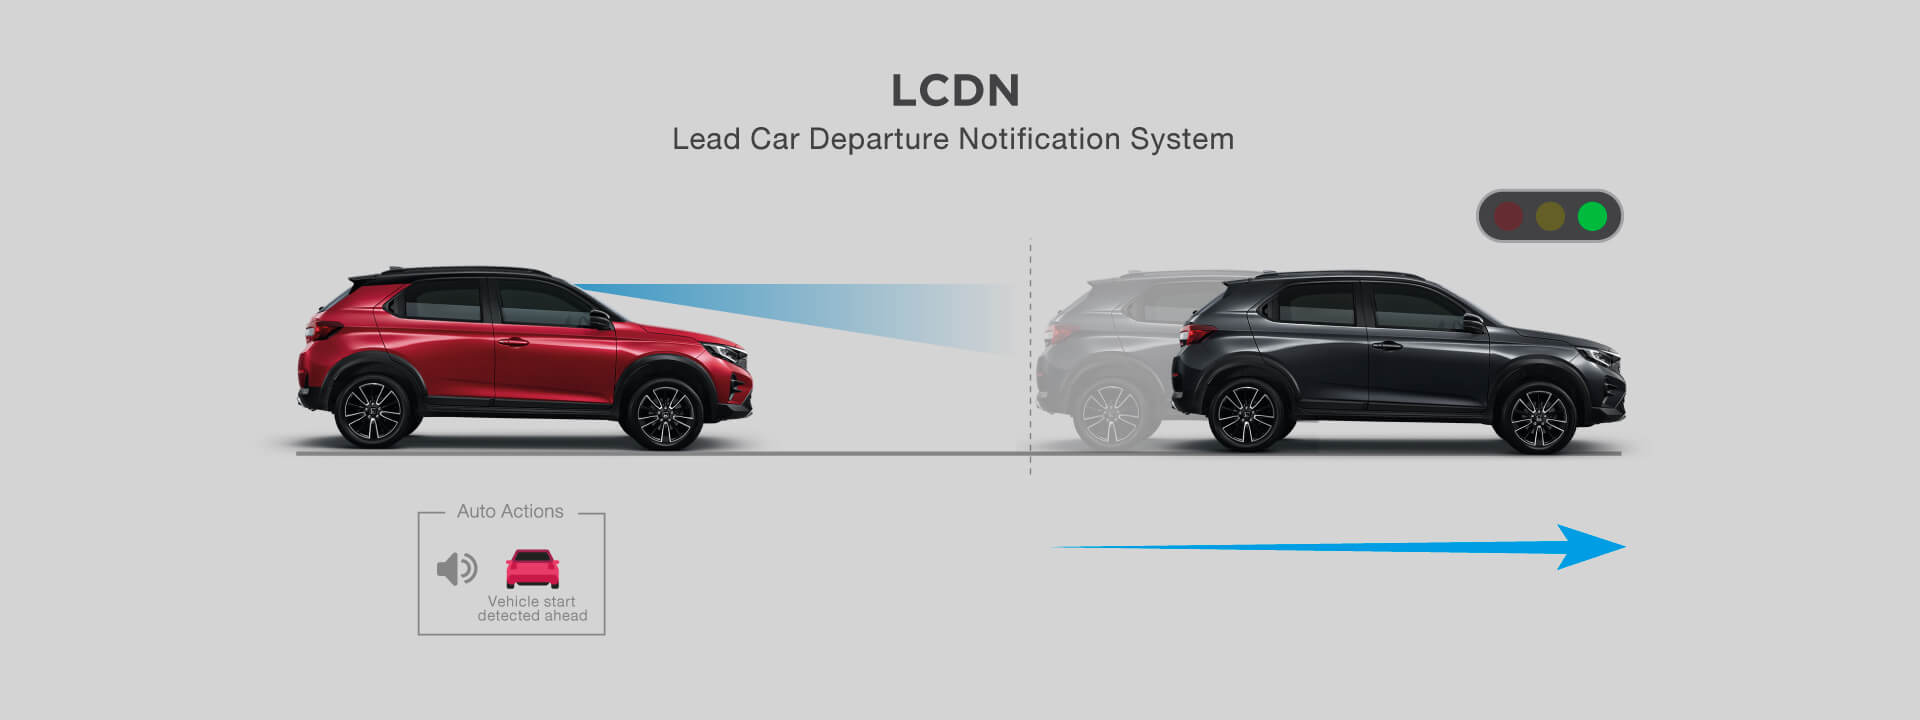 Lead Car Departure Notification System : LCDN